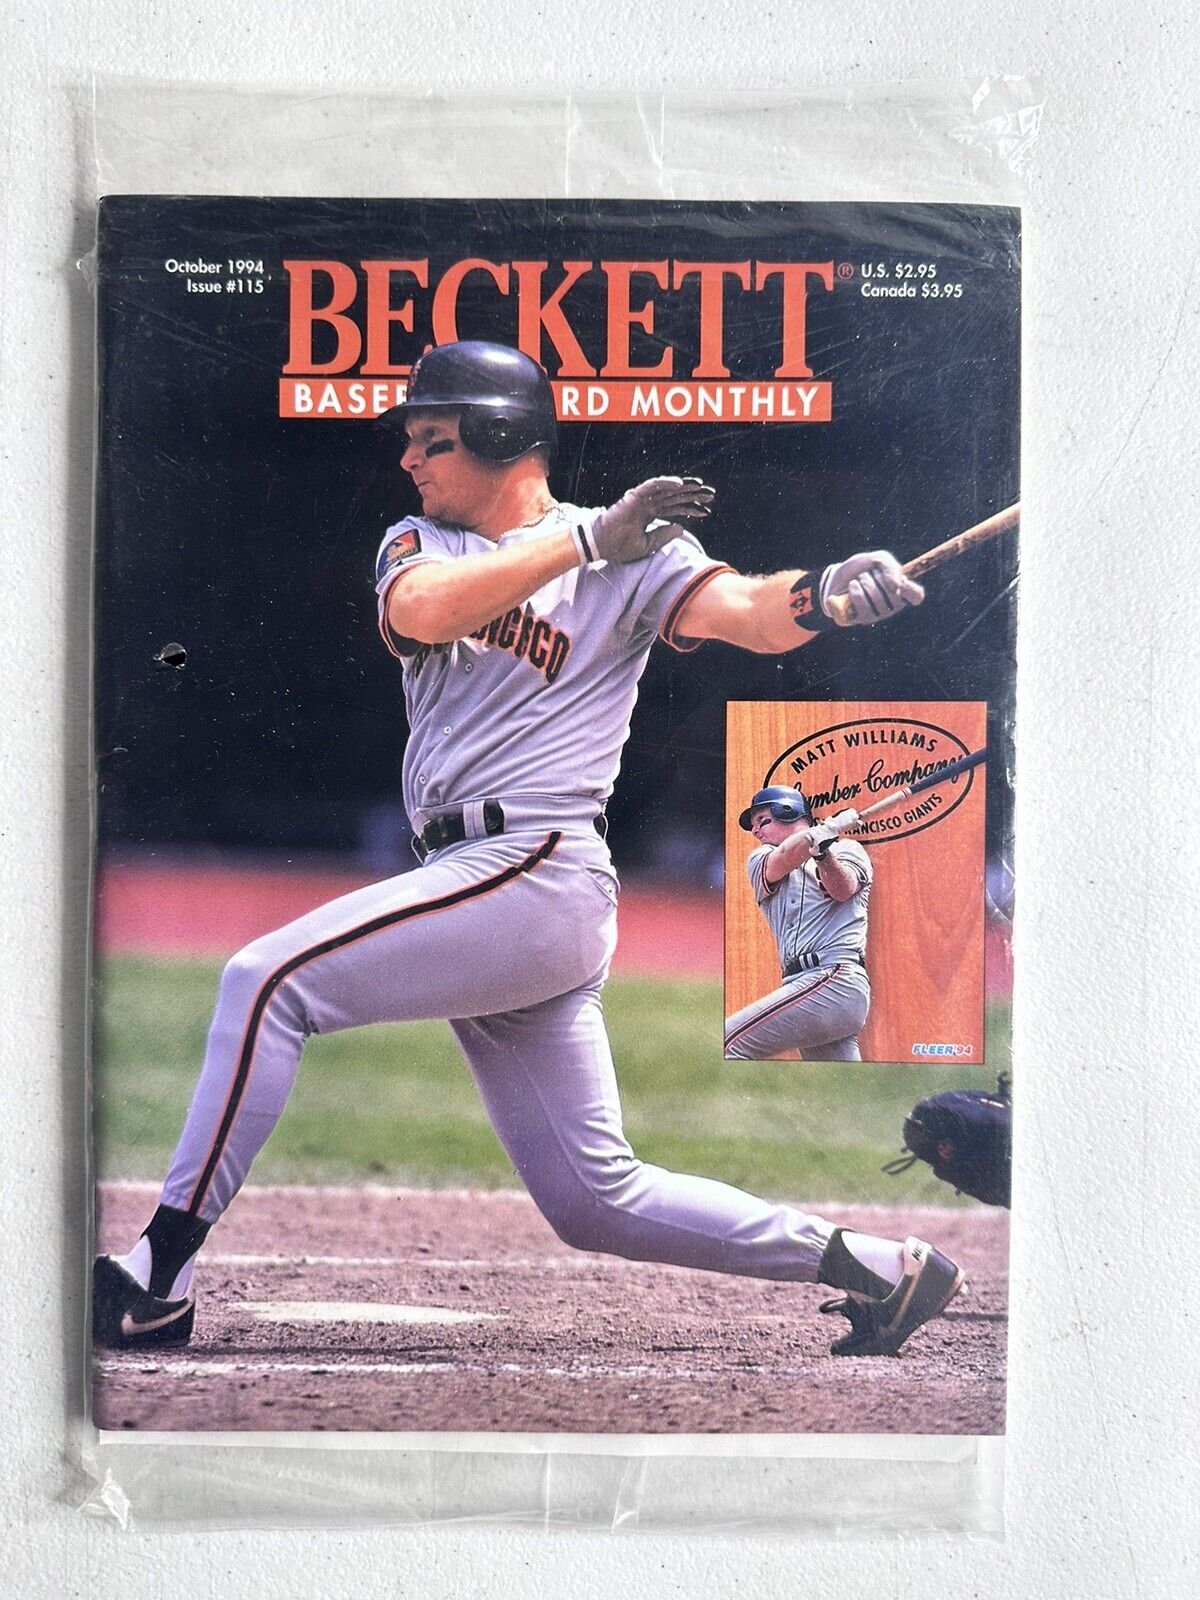 Sealed New 1994 Beckett Baseball Magazine Featuring Matt Williams - San Francisco Giants Issue No. 115 - Rare Vintage Collectible - TreasuTiques